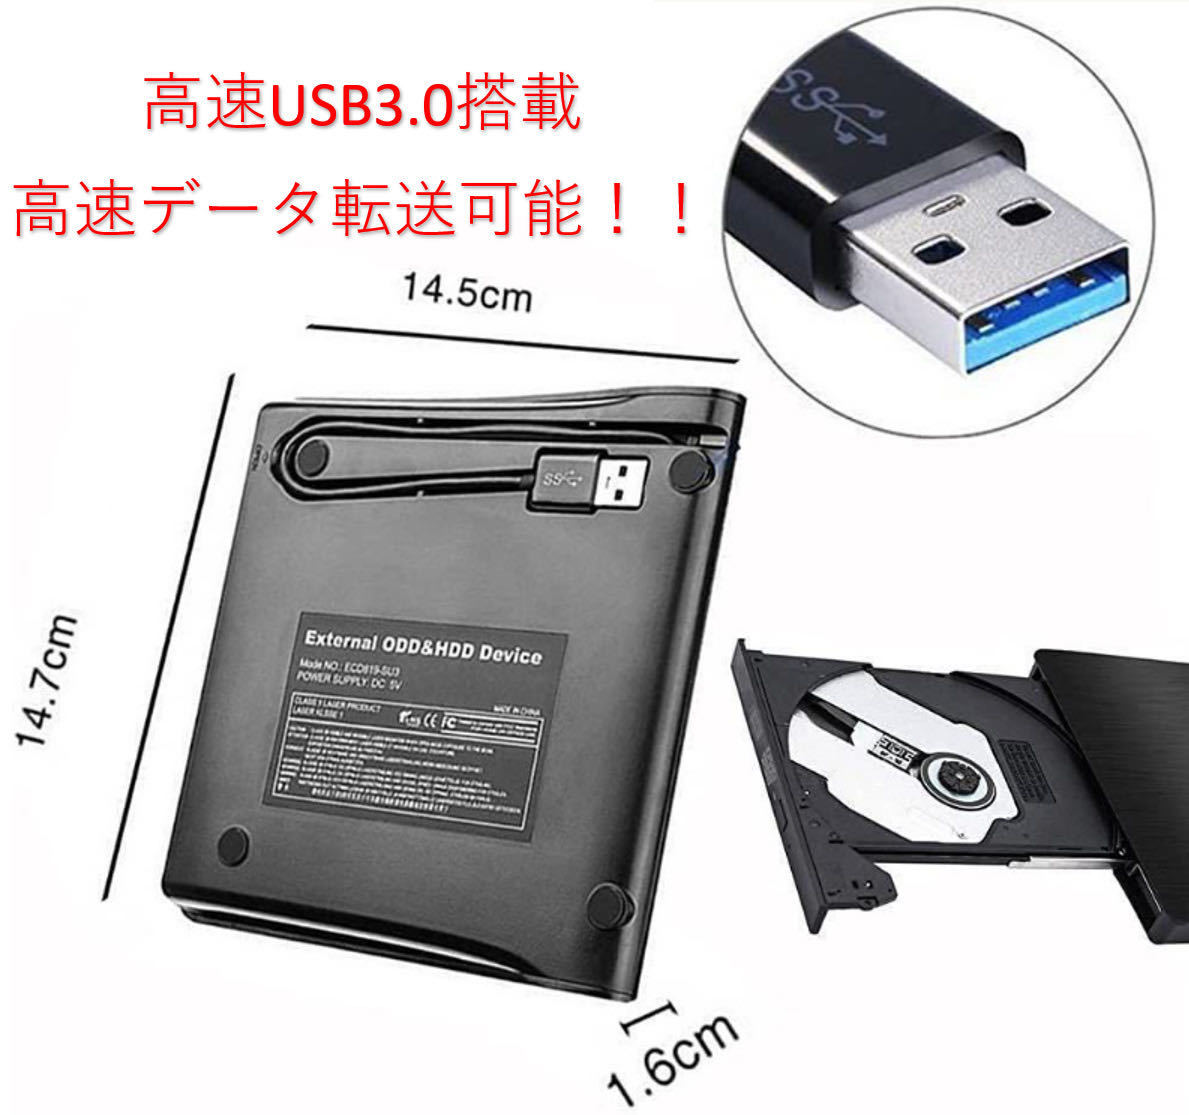 CD DVDドライブ 外付け USB3.0 CD/DVD読取・書込 USB3.0ポータブルドライブ Window/Mac OS両対応 高速 静音 簡単操作 DVD±RW CD-RW_画像2